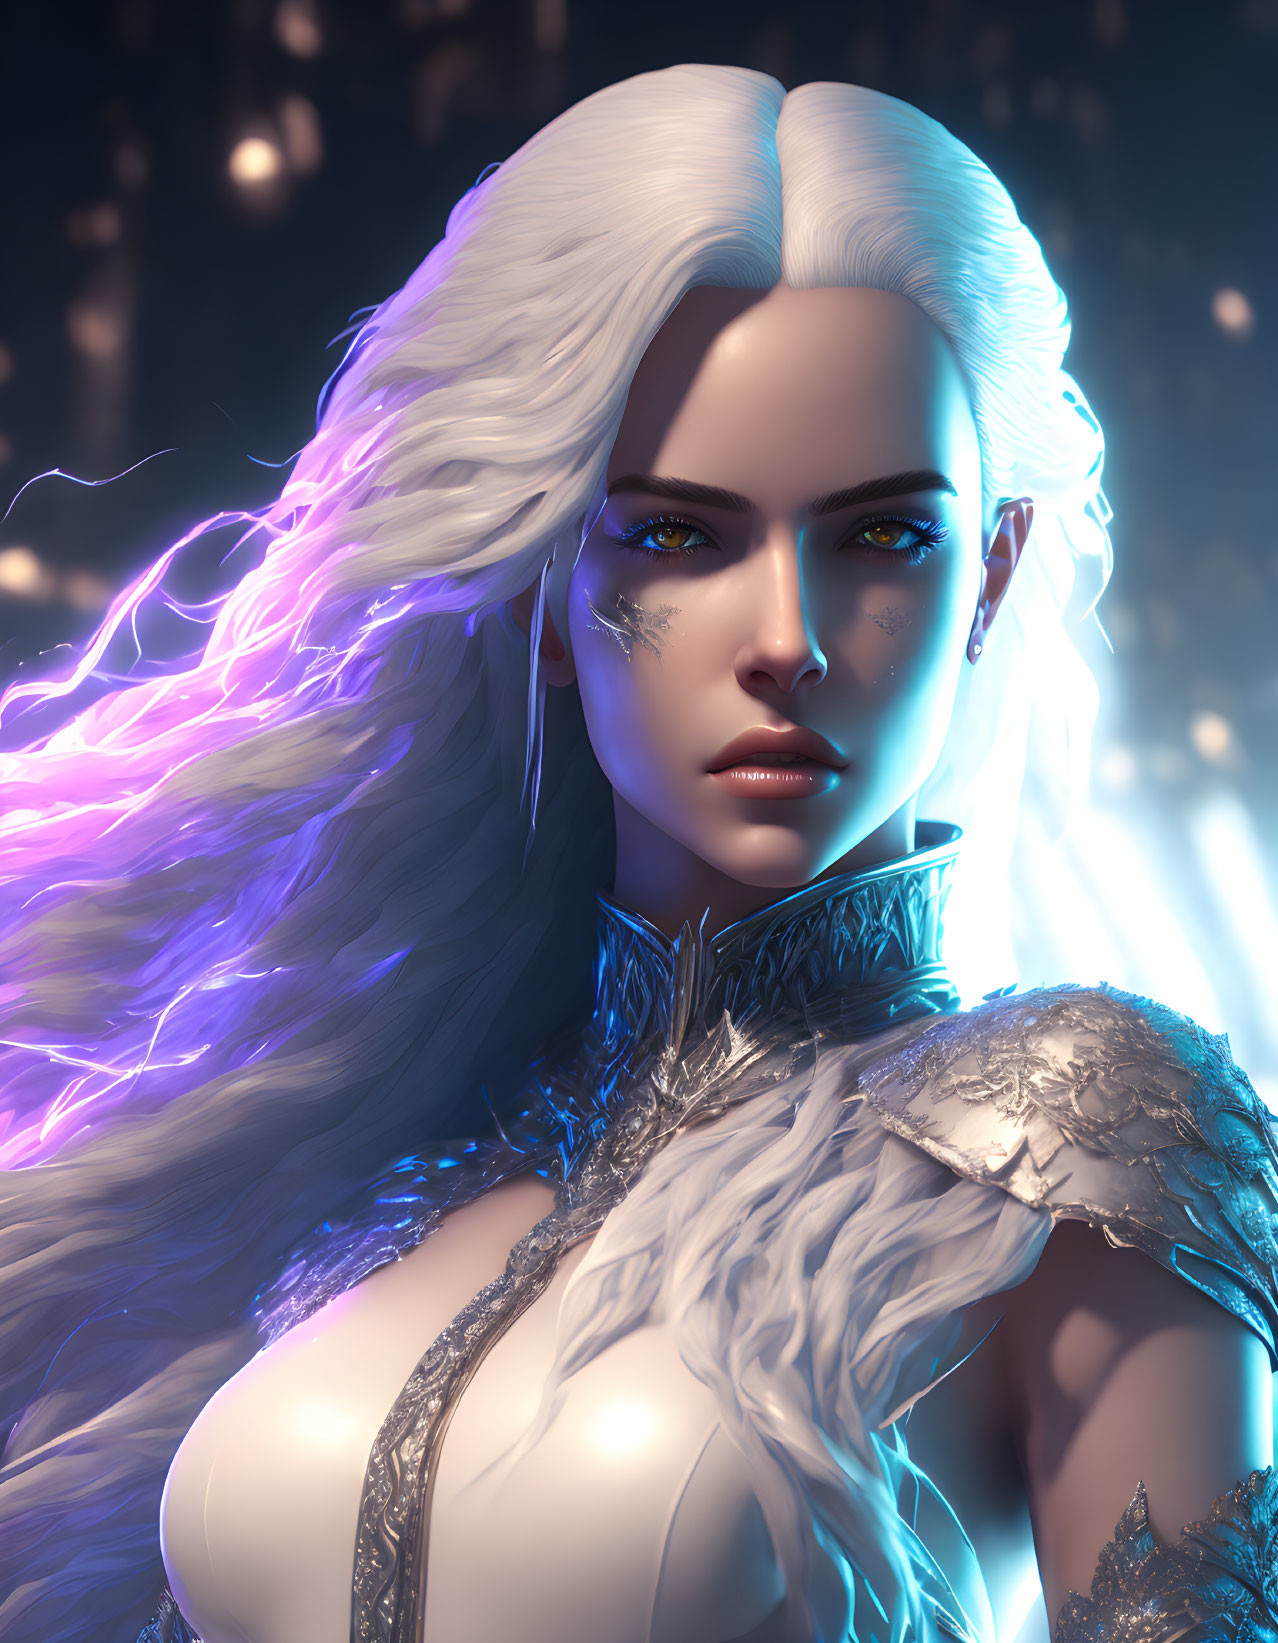 Digital artwork: Woman with purple eyes, white hair, and fantasy attire